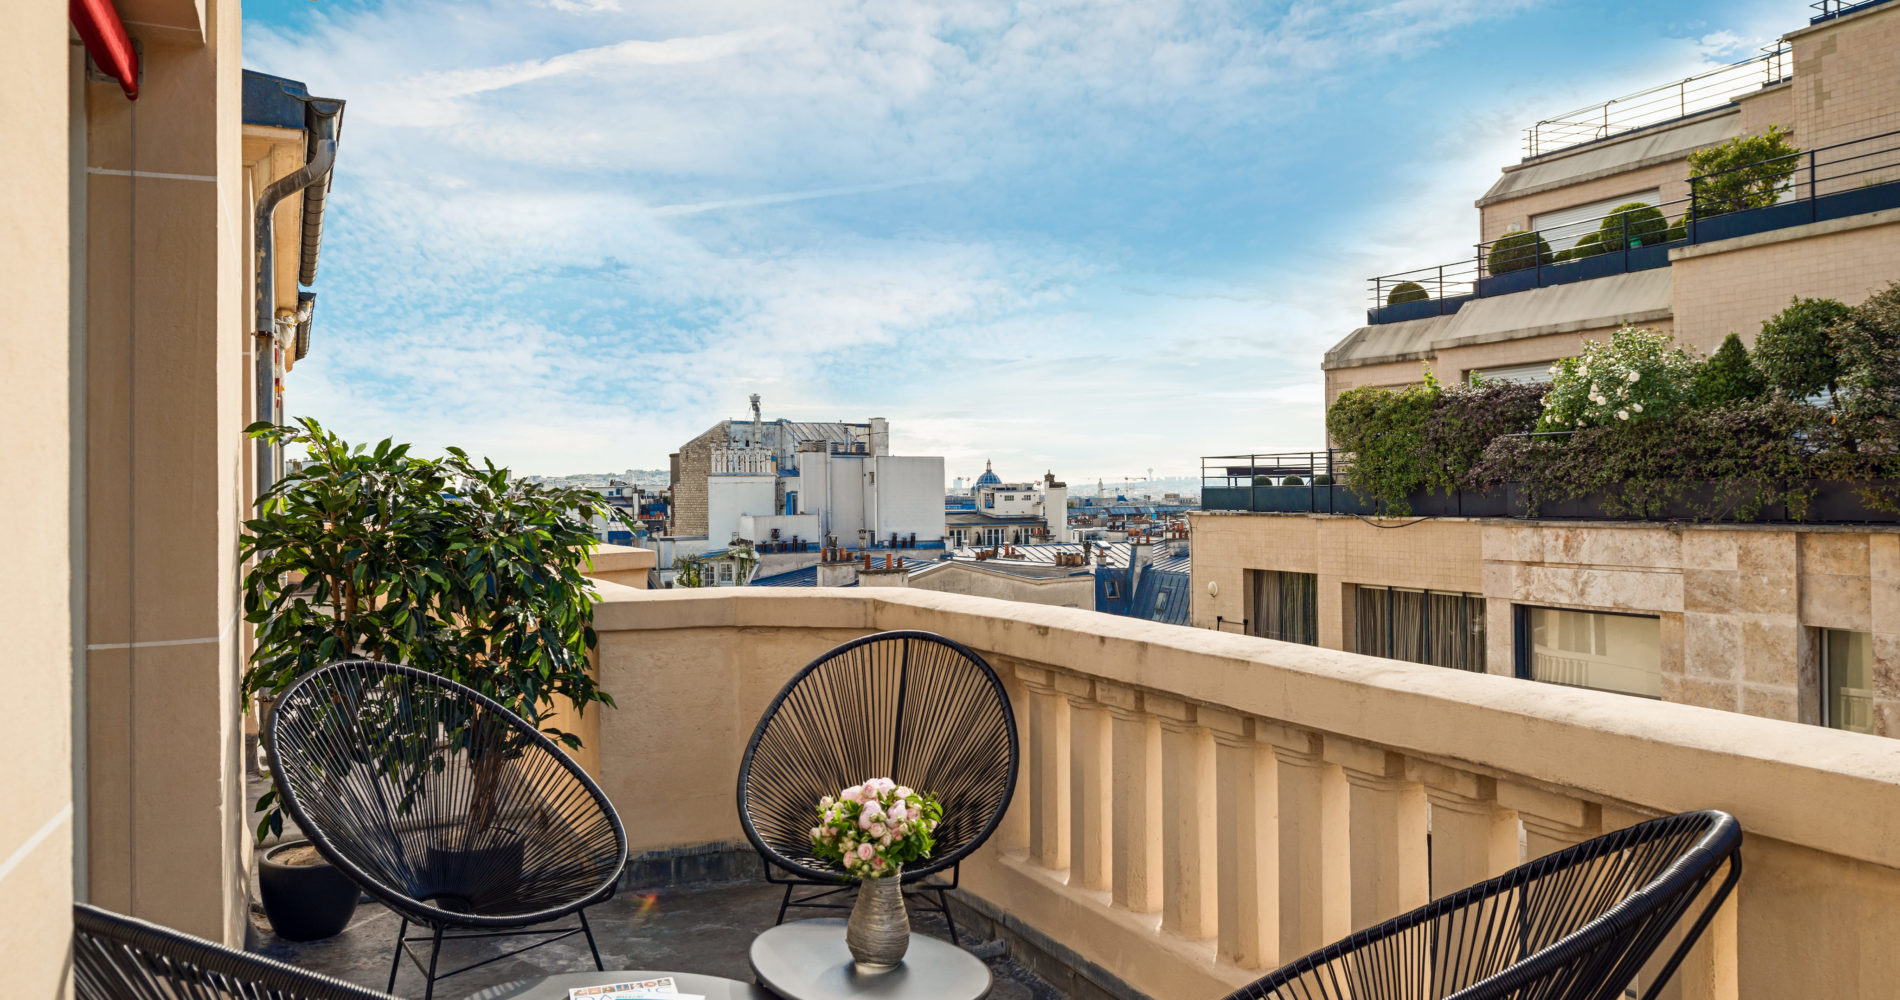 Rent two bedroom apartment in district champs-elysées for short term ...